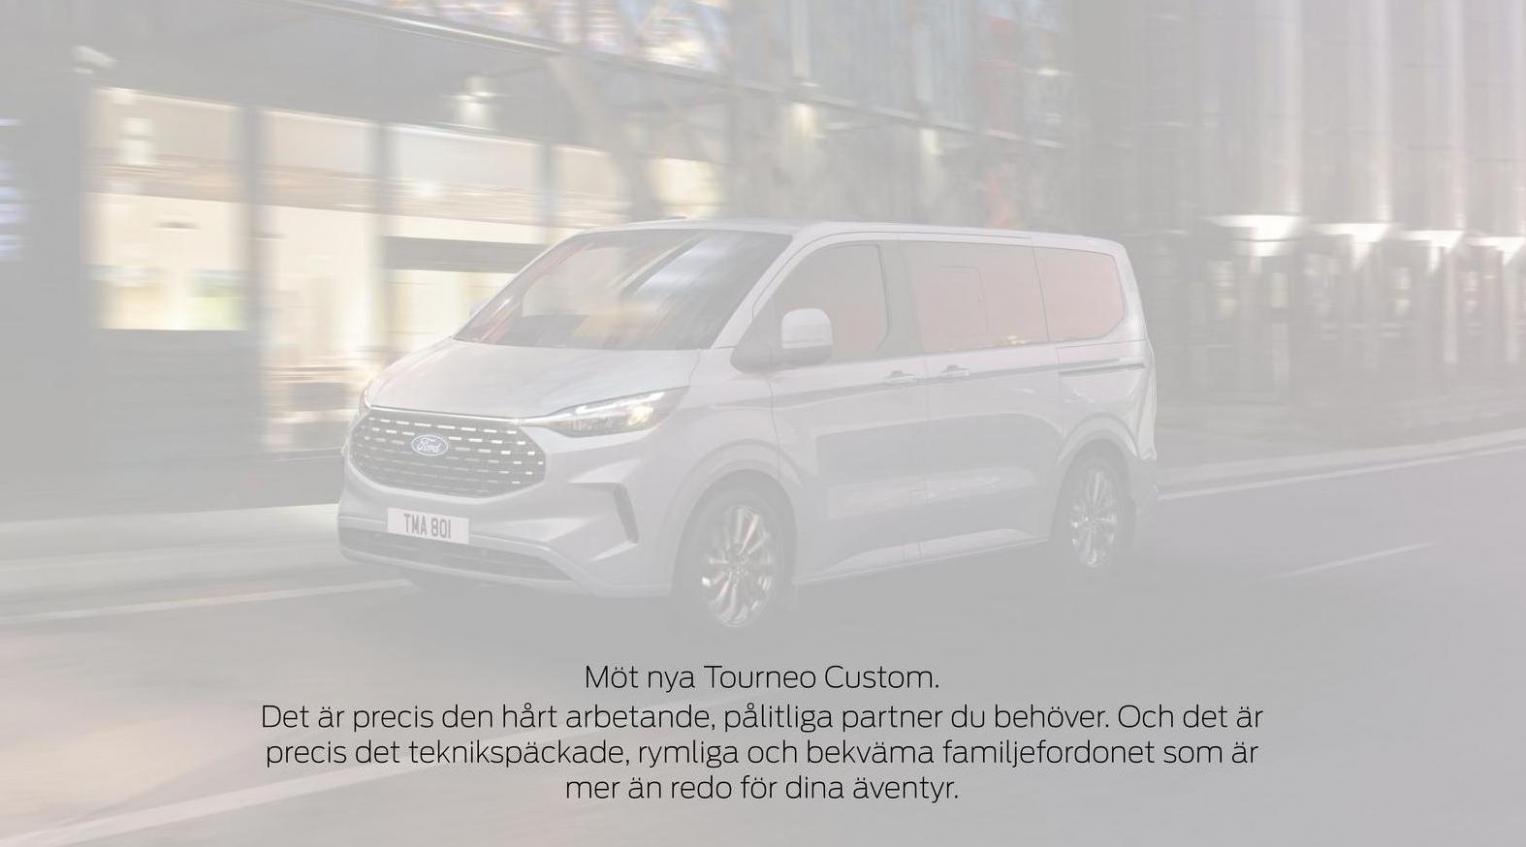 Ford Nya Tourneo Custom. Page 2